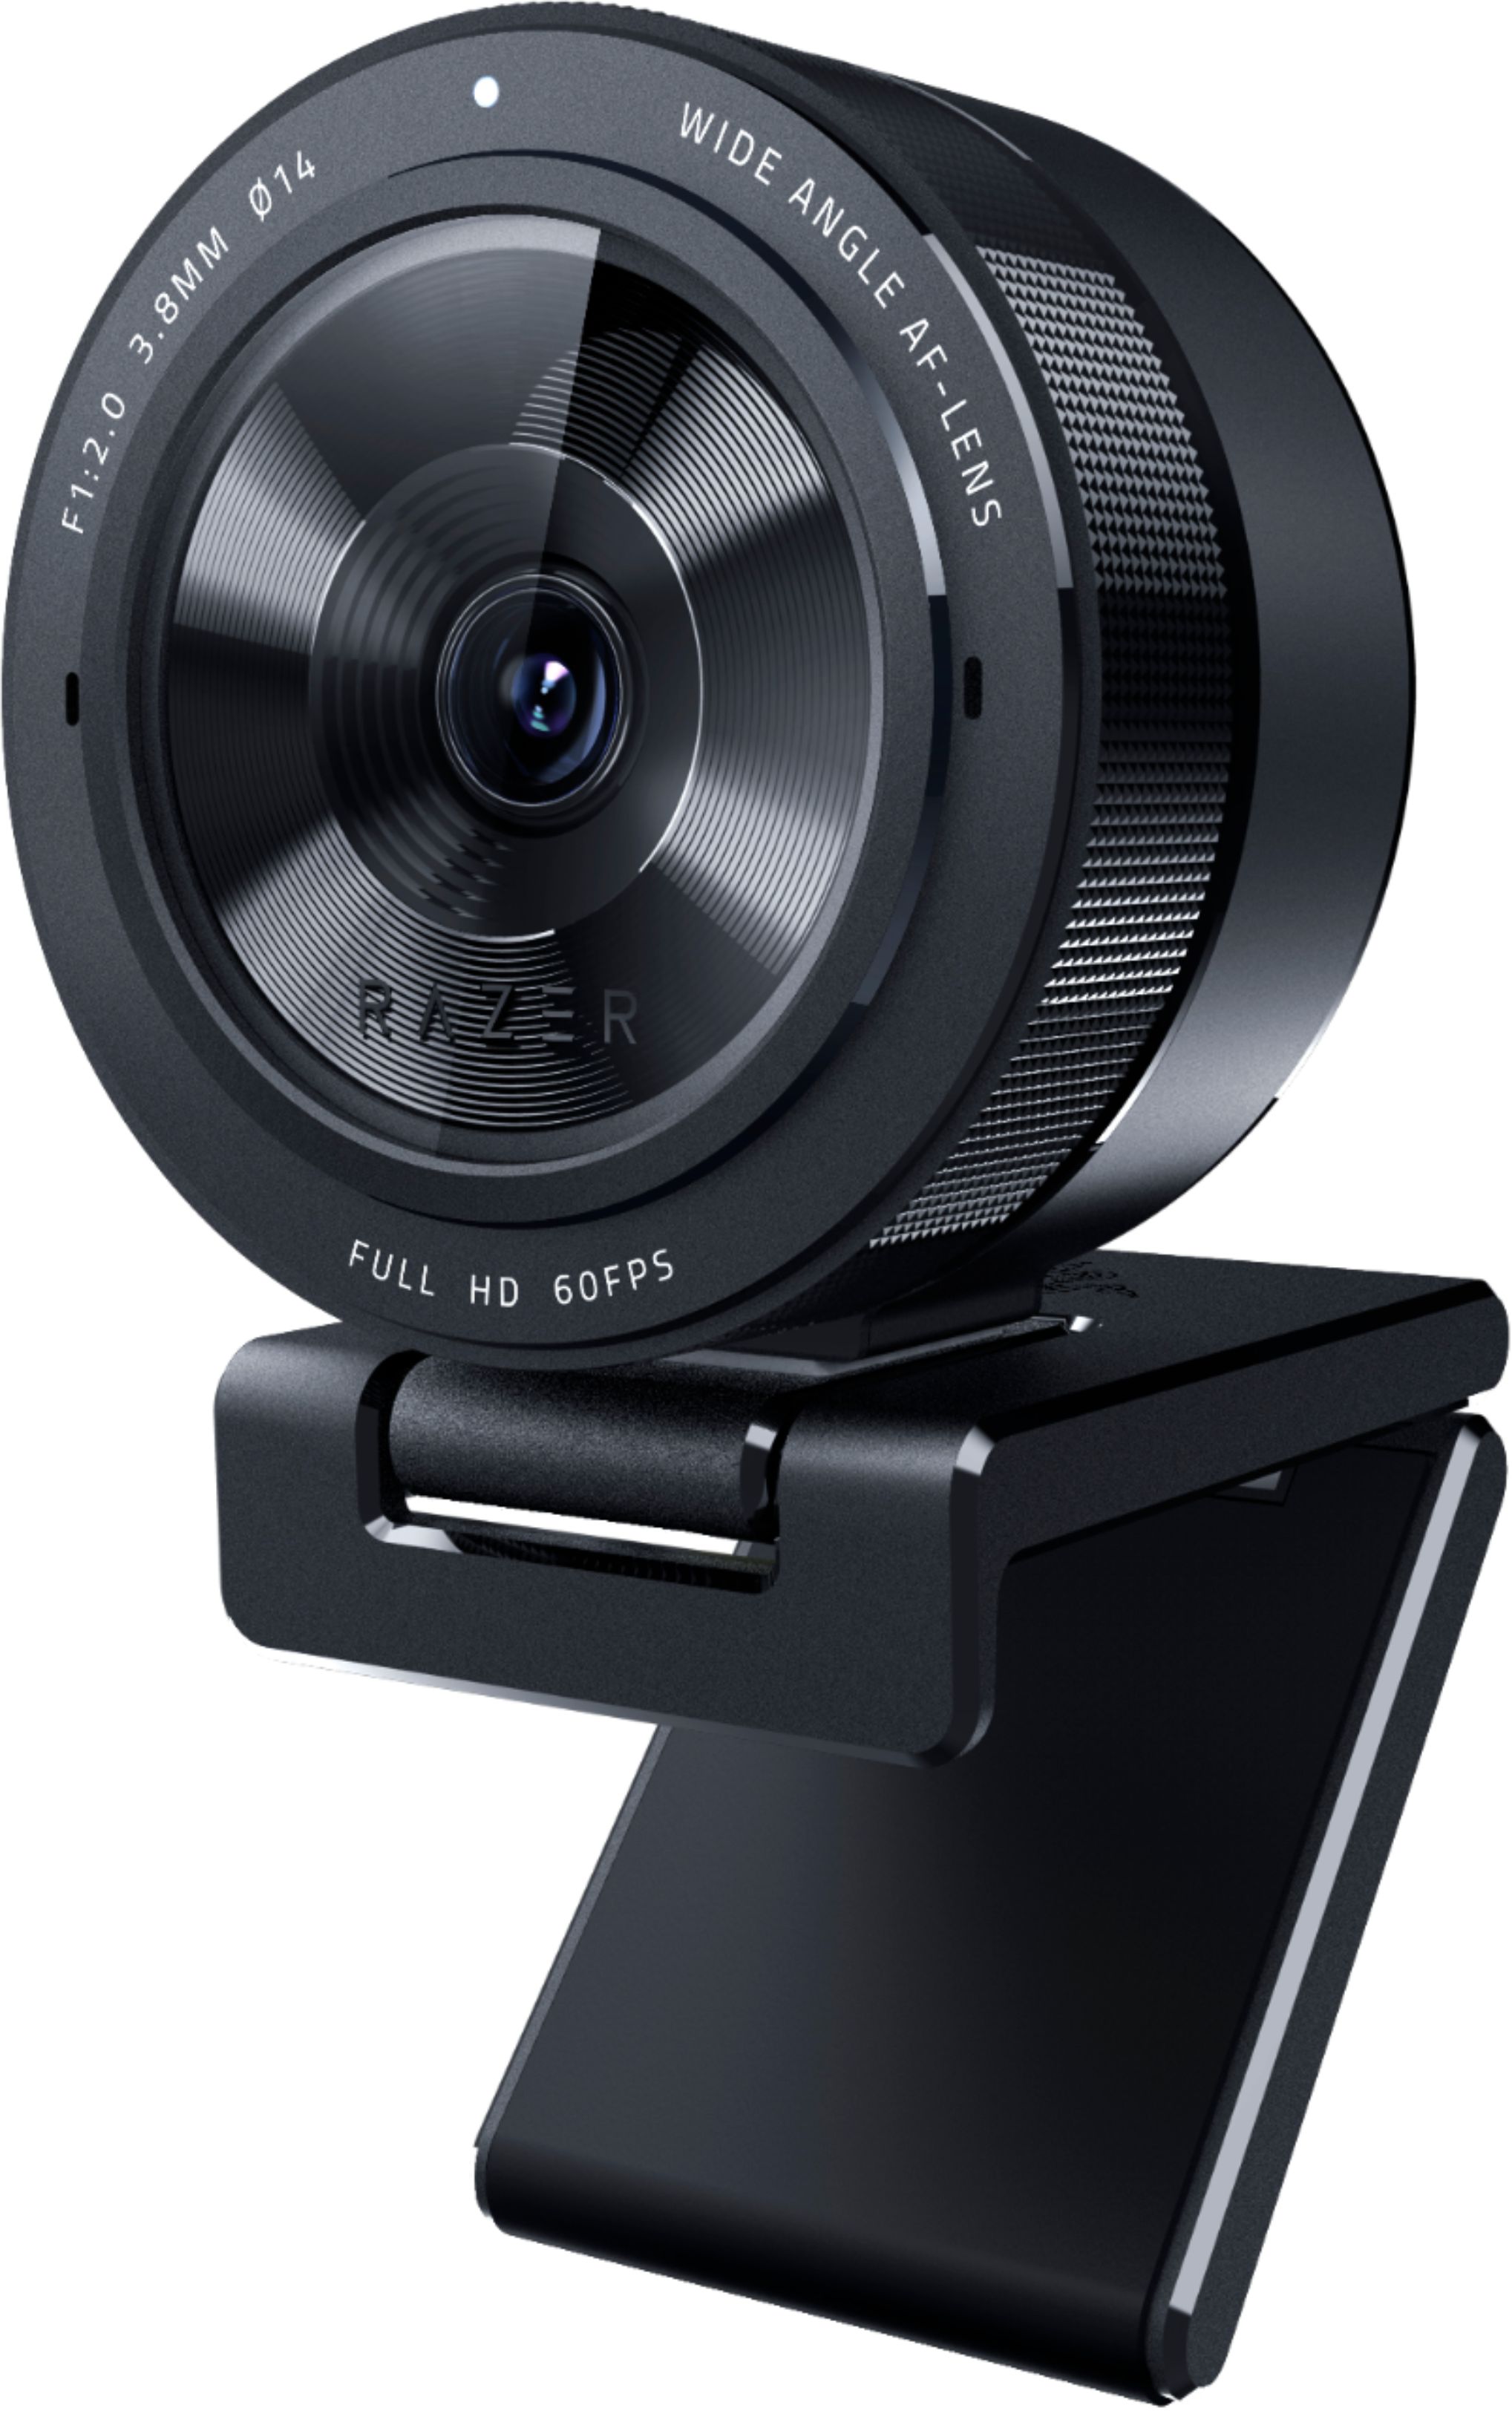 Razer Kiyo Pro 1920 x 1080 Webcam with High-Performance Adaptive 